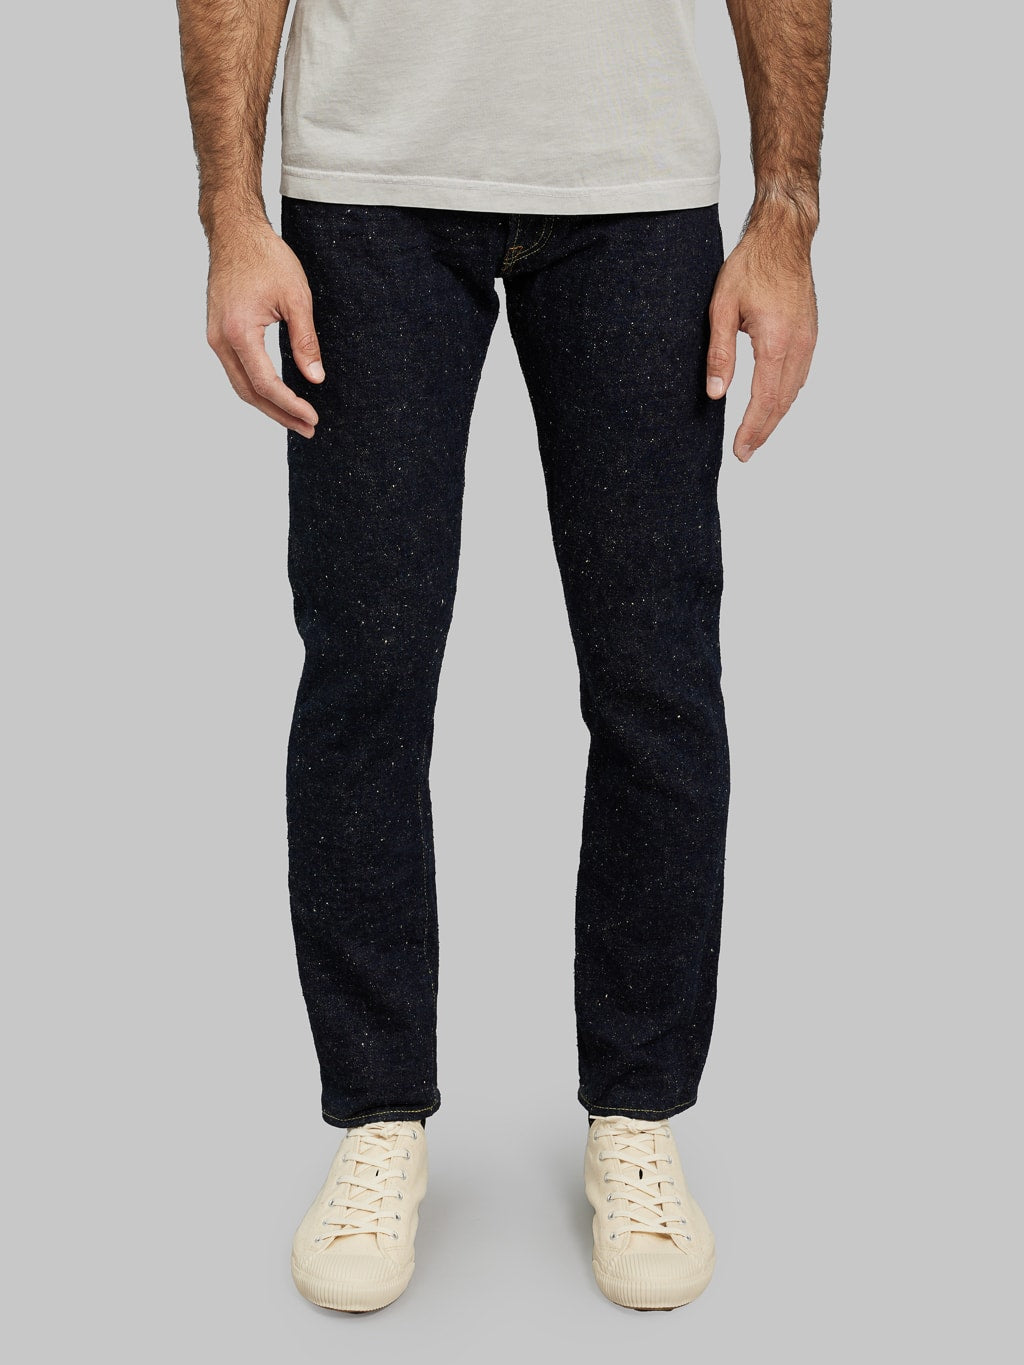 ONI Denim 544 Asphalt 20oz Stylish Tapered Jeans front fit